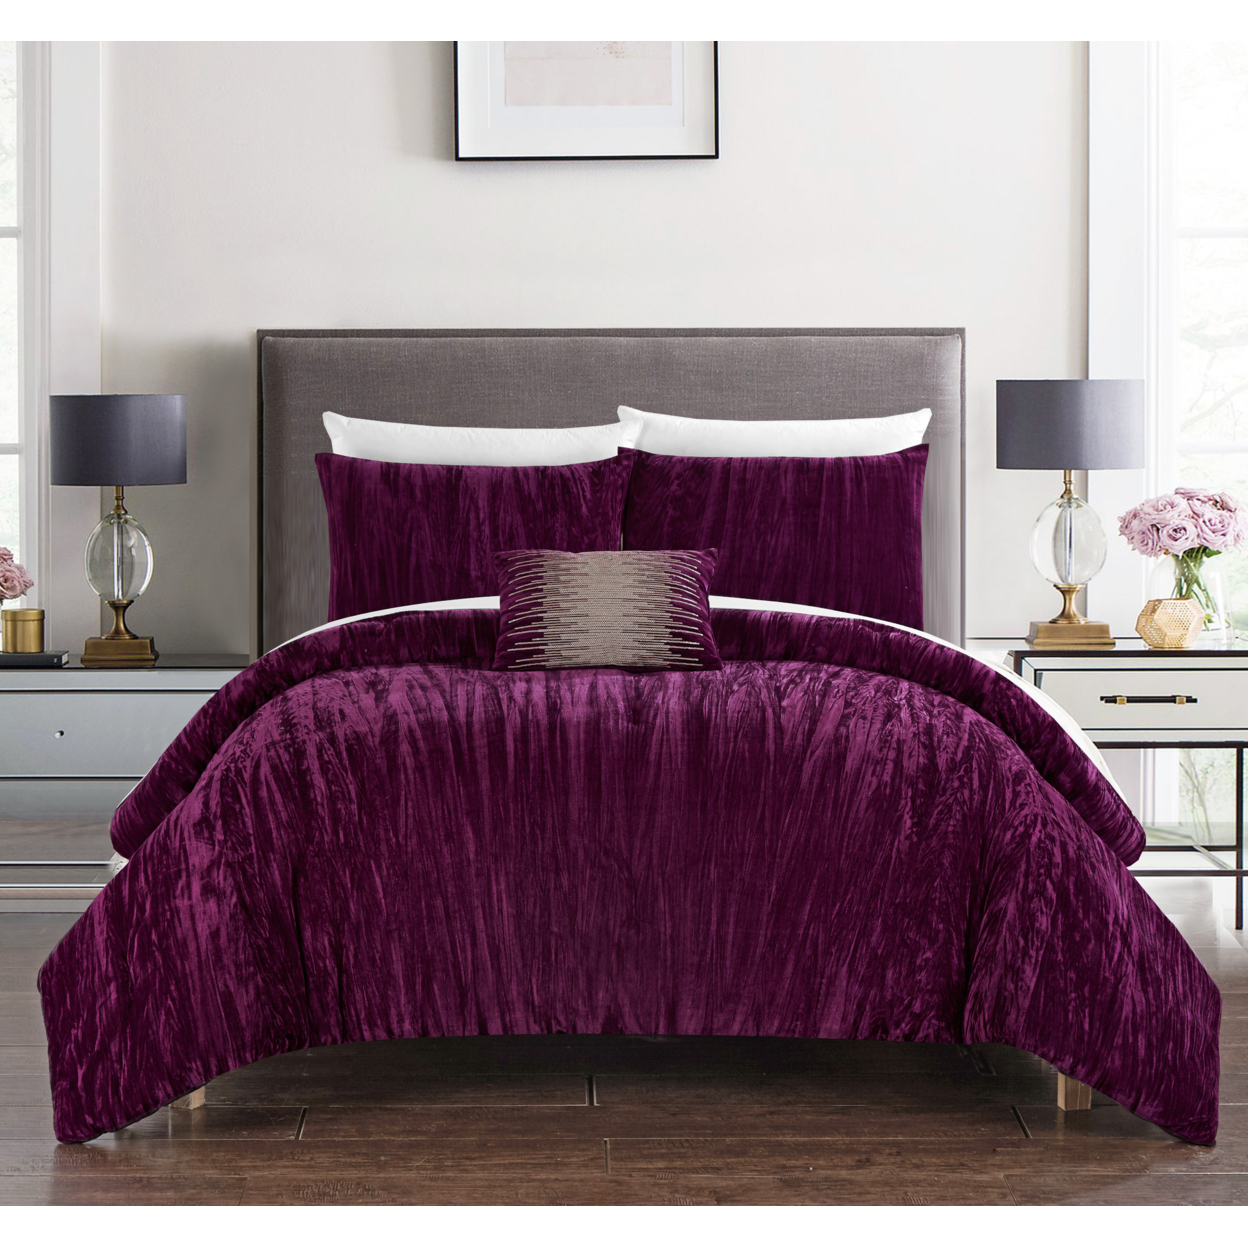 Merieta 4 Piece Comforter Set Crinkle Crushed Velvet Bedding - Decorative Pillow Shams Included - Plum, King